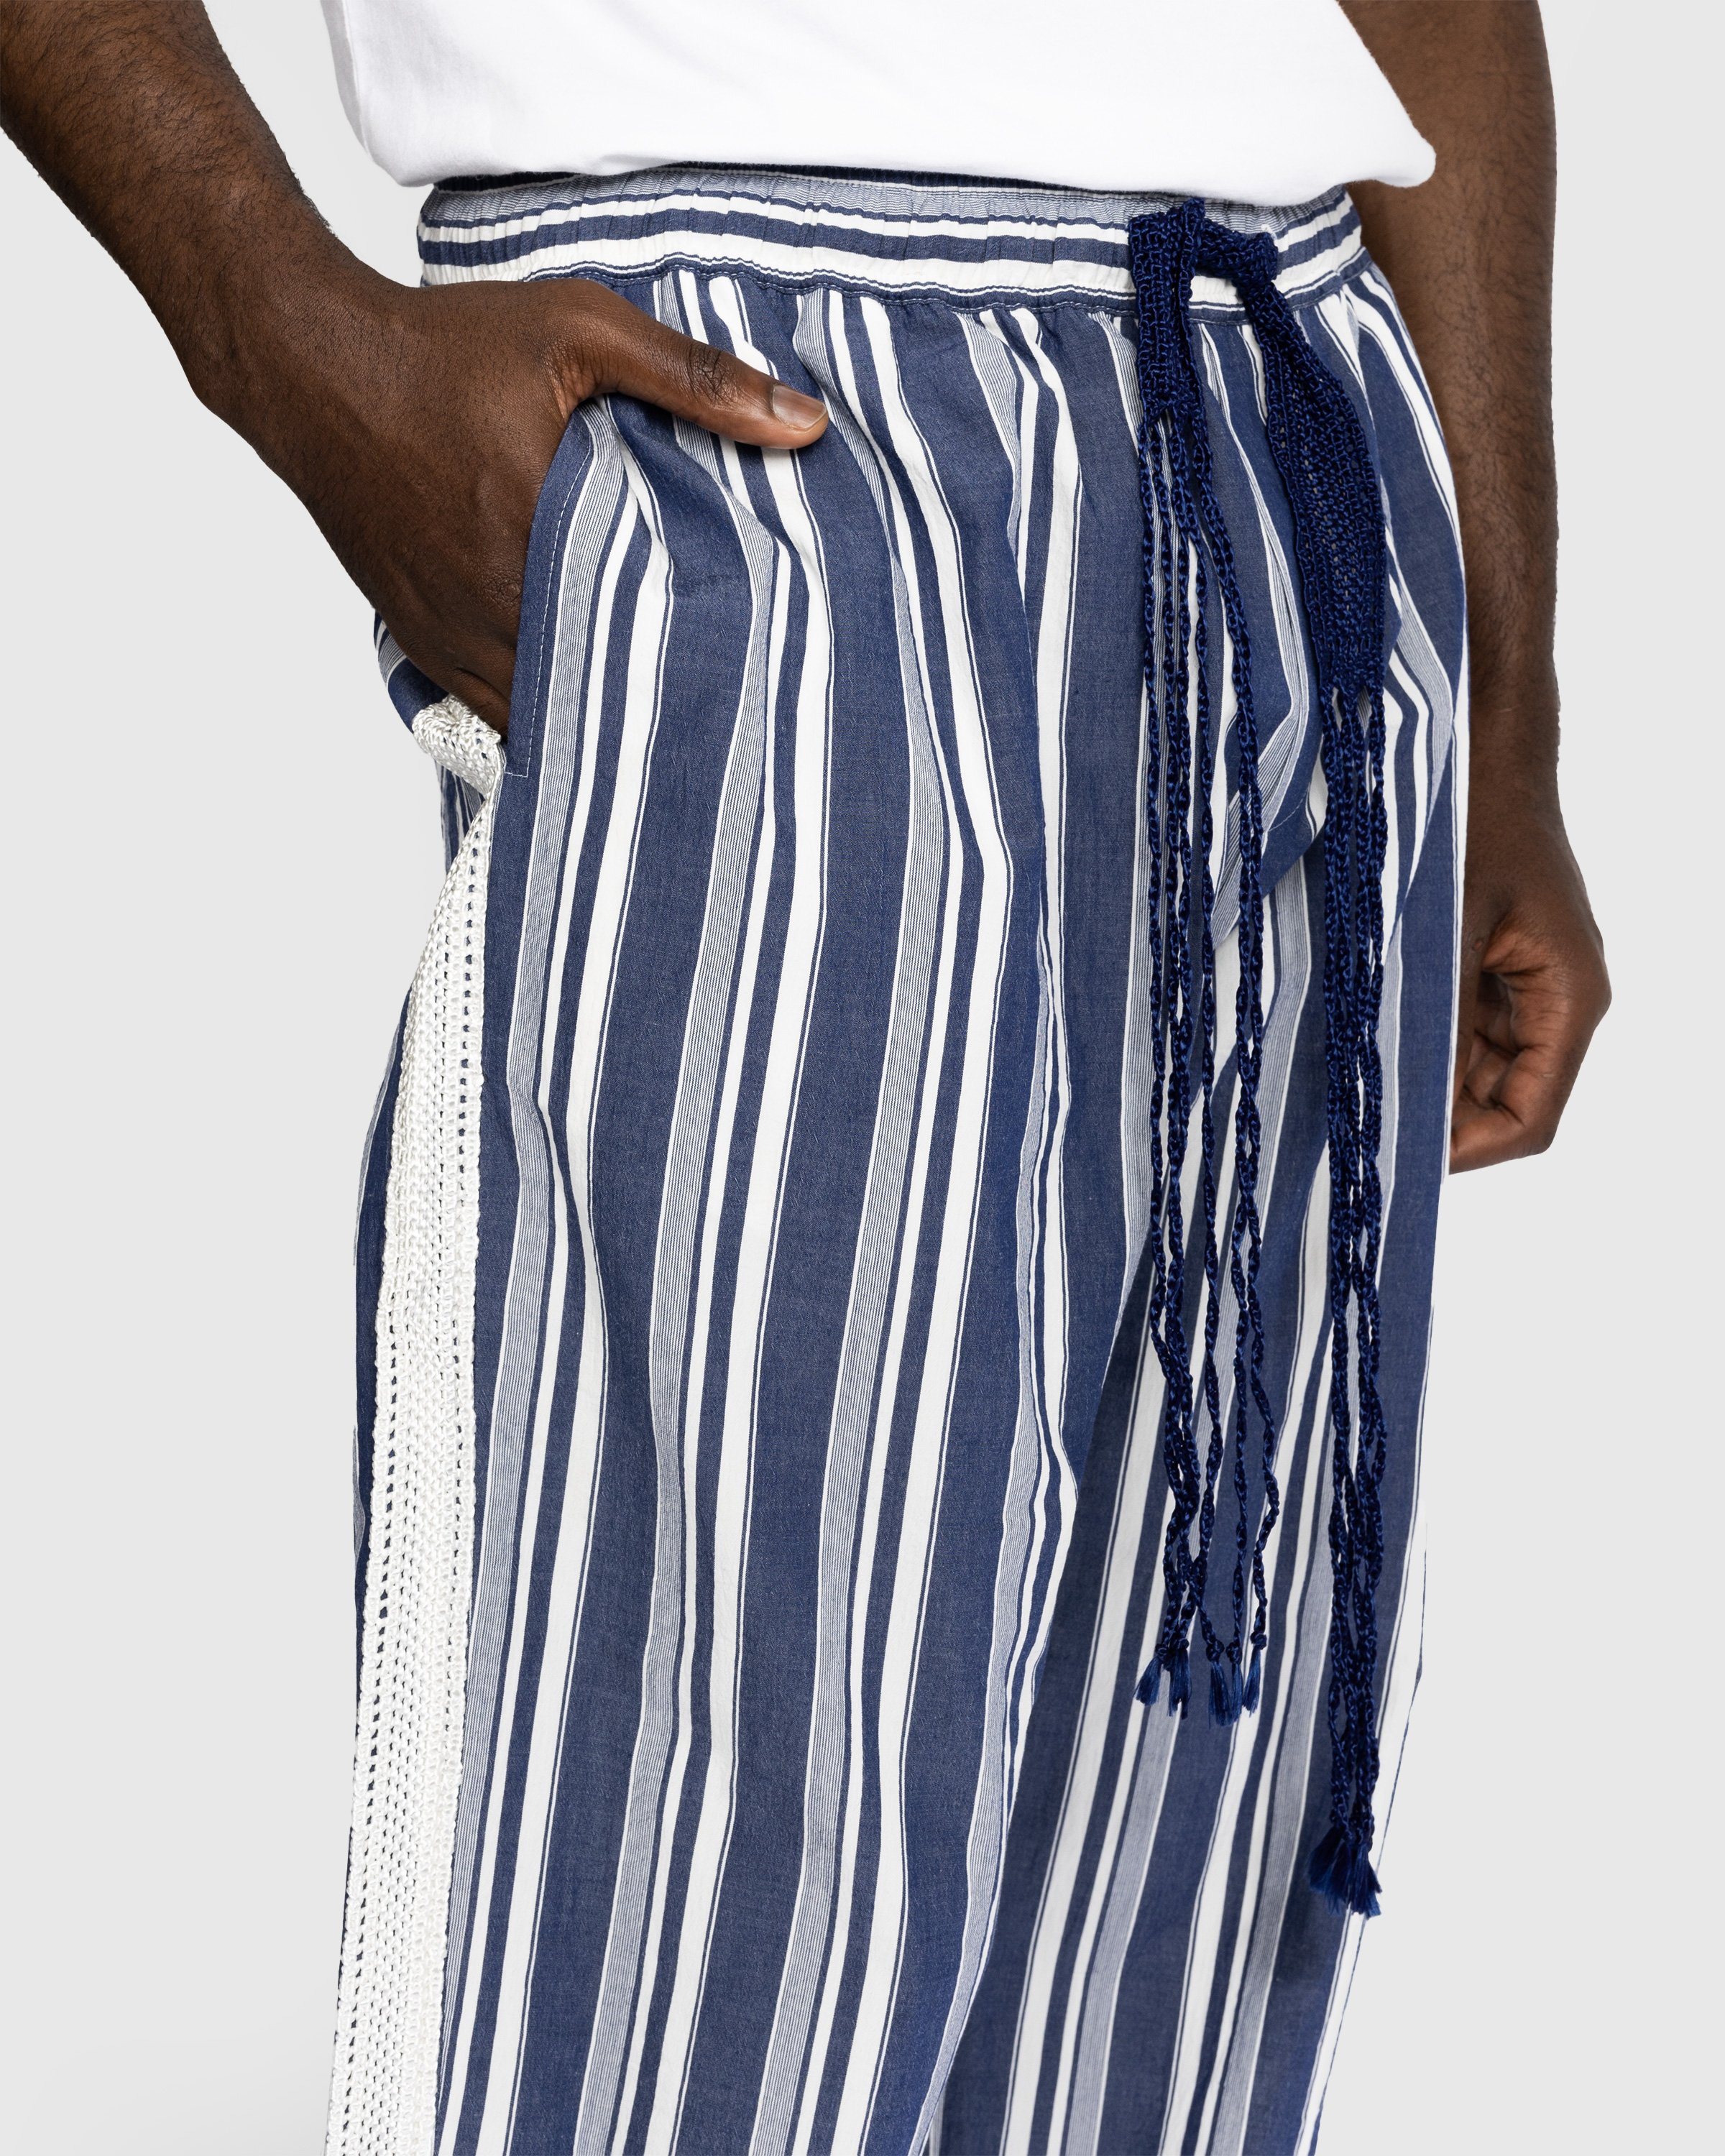 Wales Bonner - Soul Pyjama Trousers - Clothing - Blue - Image 4